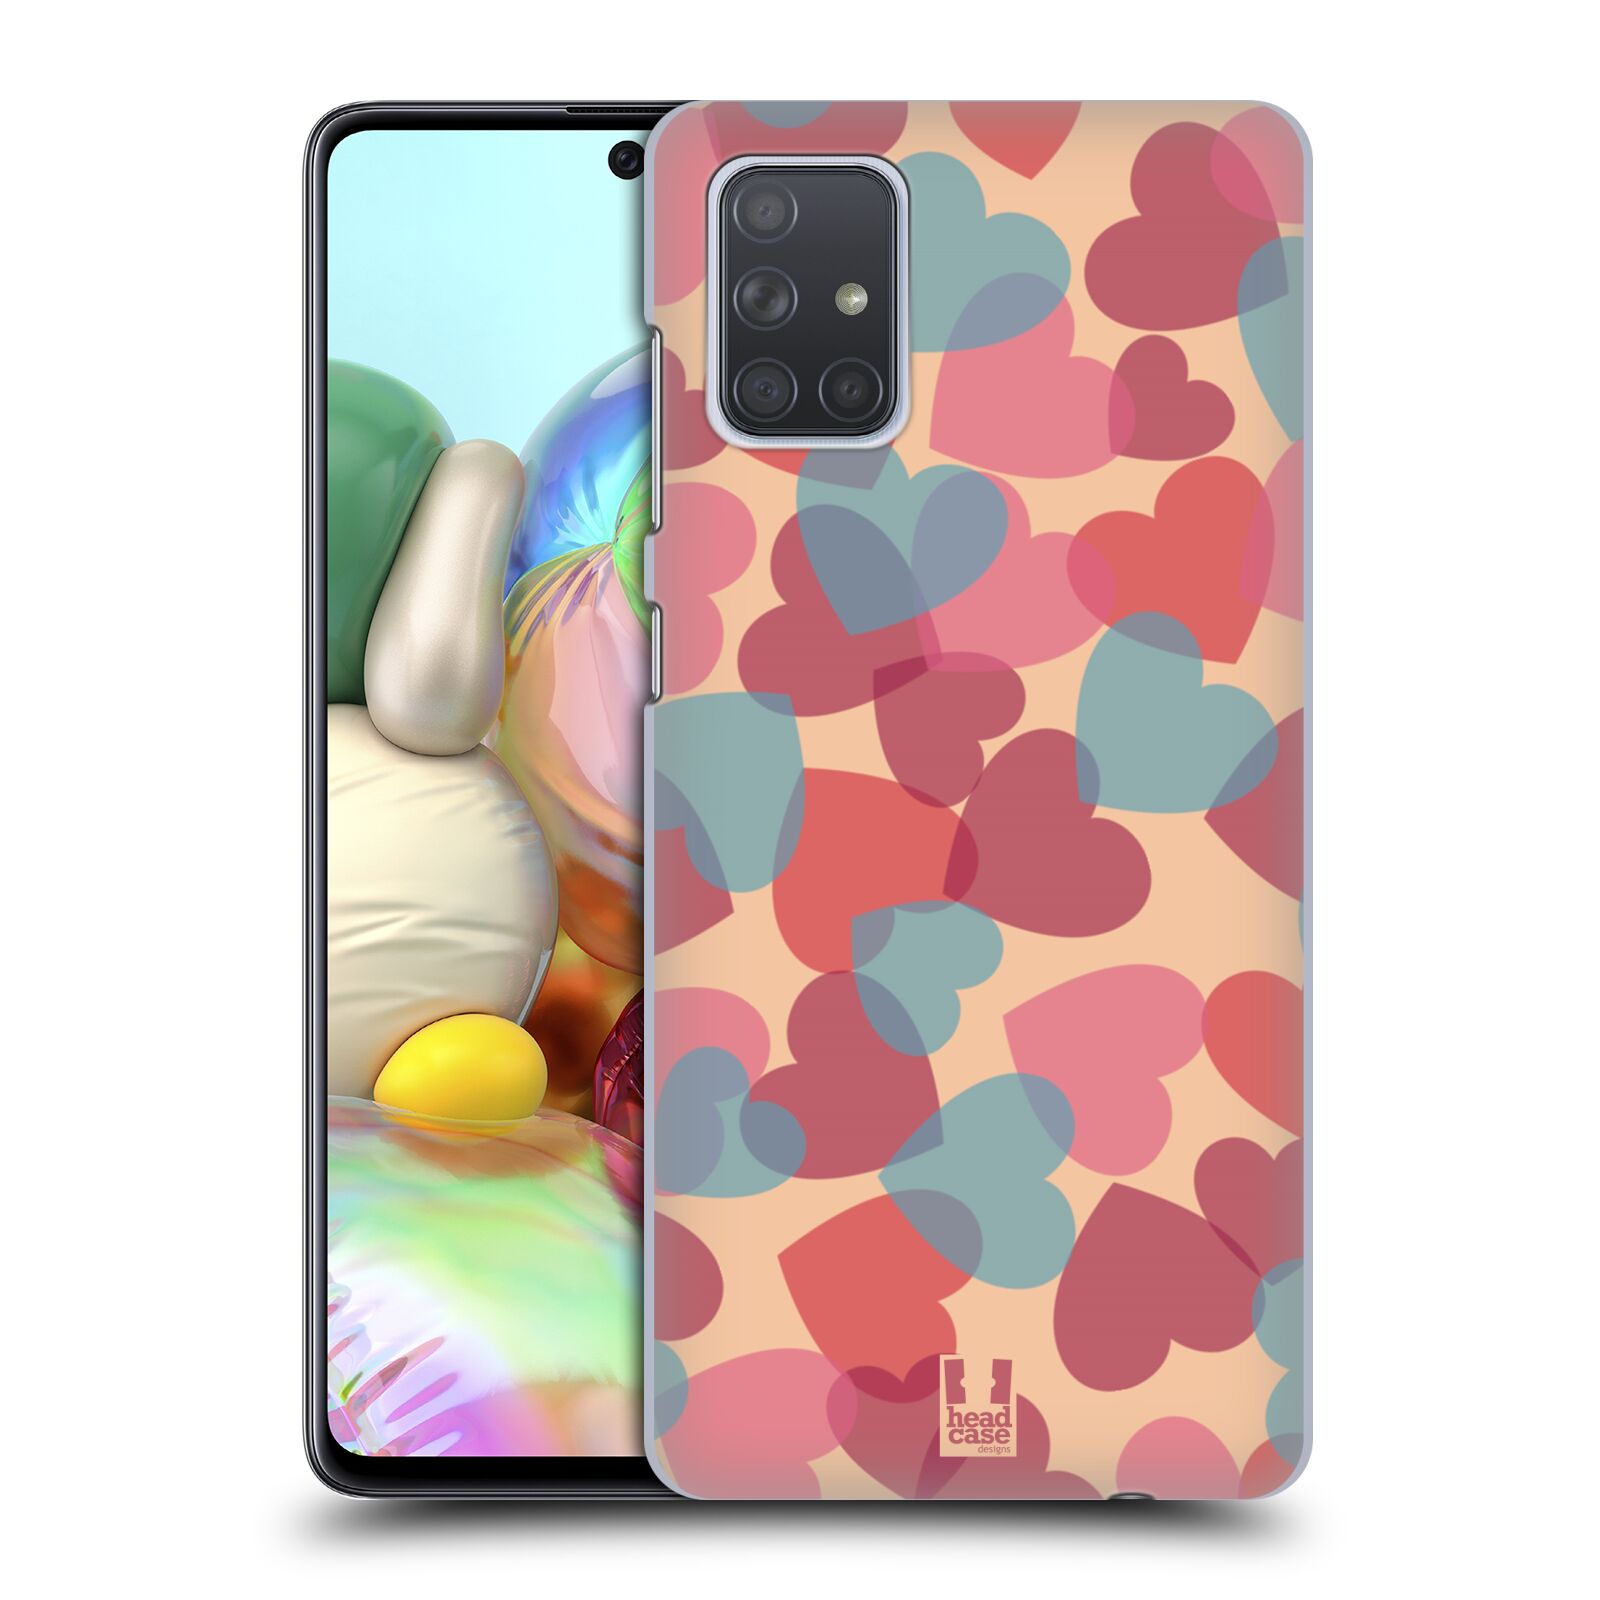 Zadní obal pro mobil Samsung Galaxy A71 - HEAD CASE - Růžová srdíčka kreslený vzor